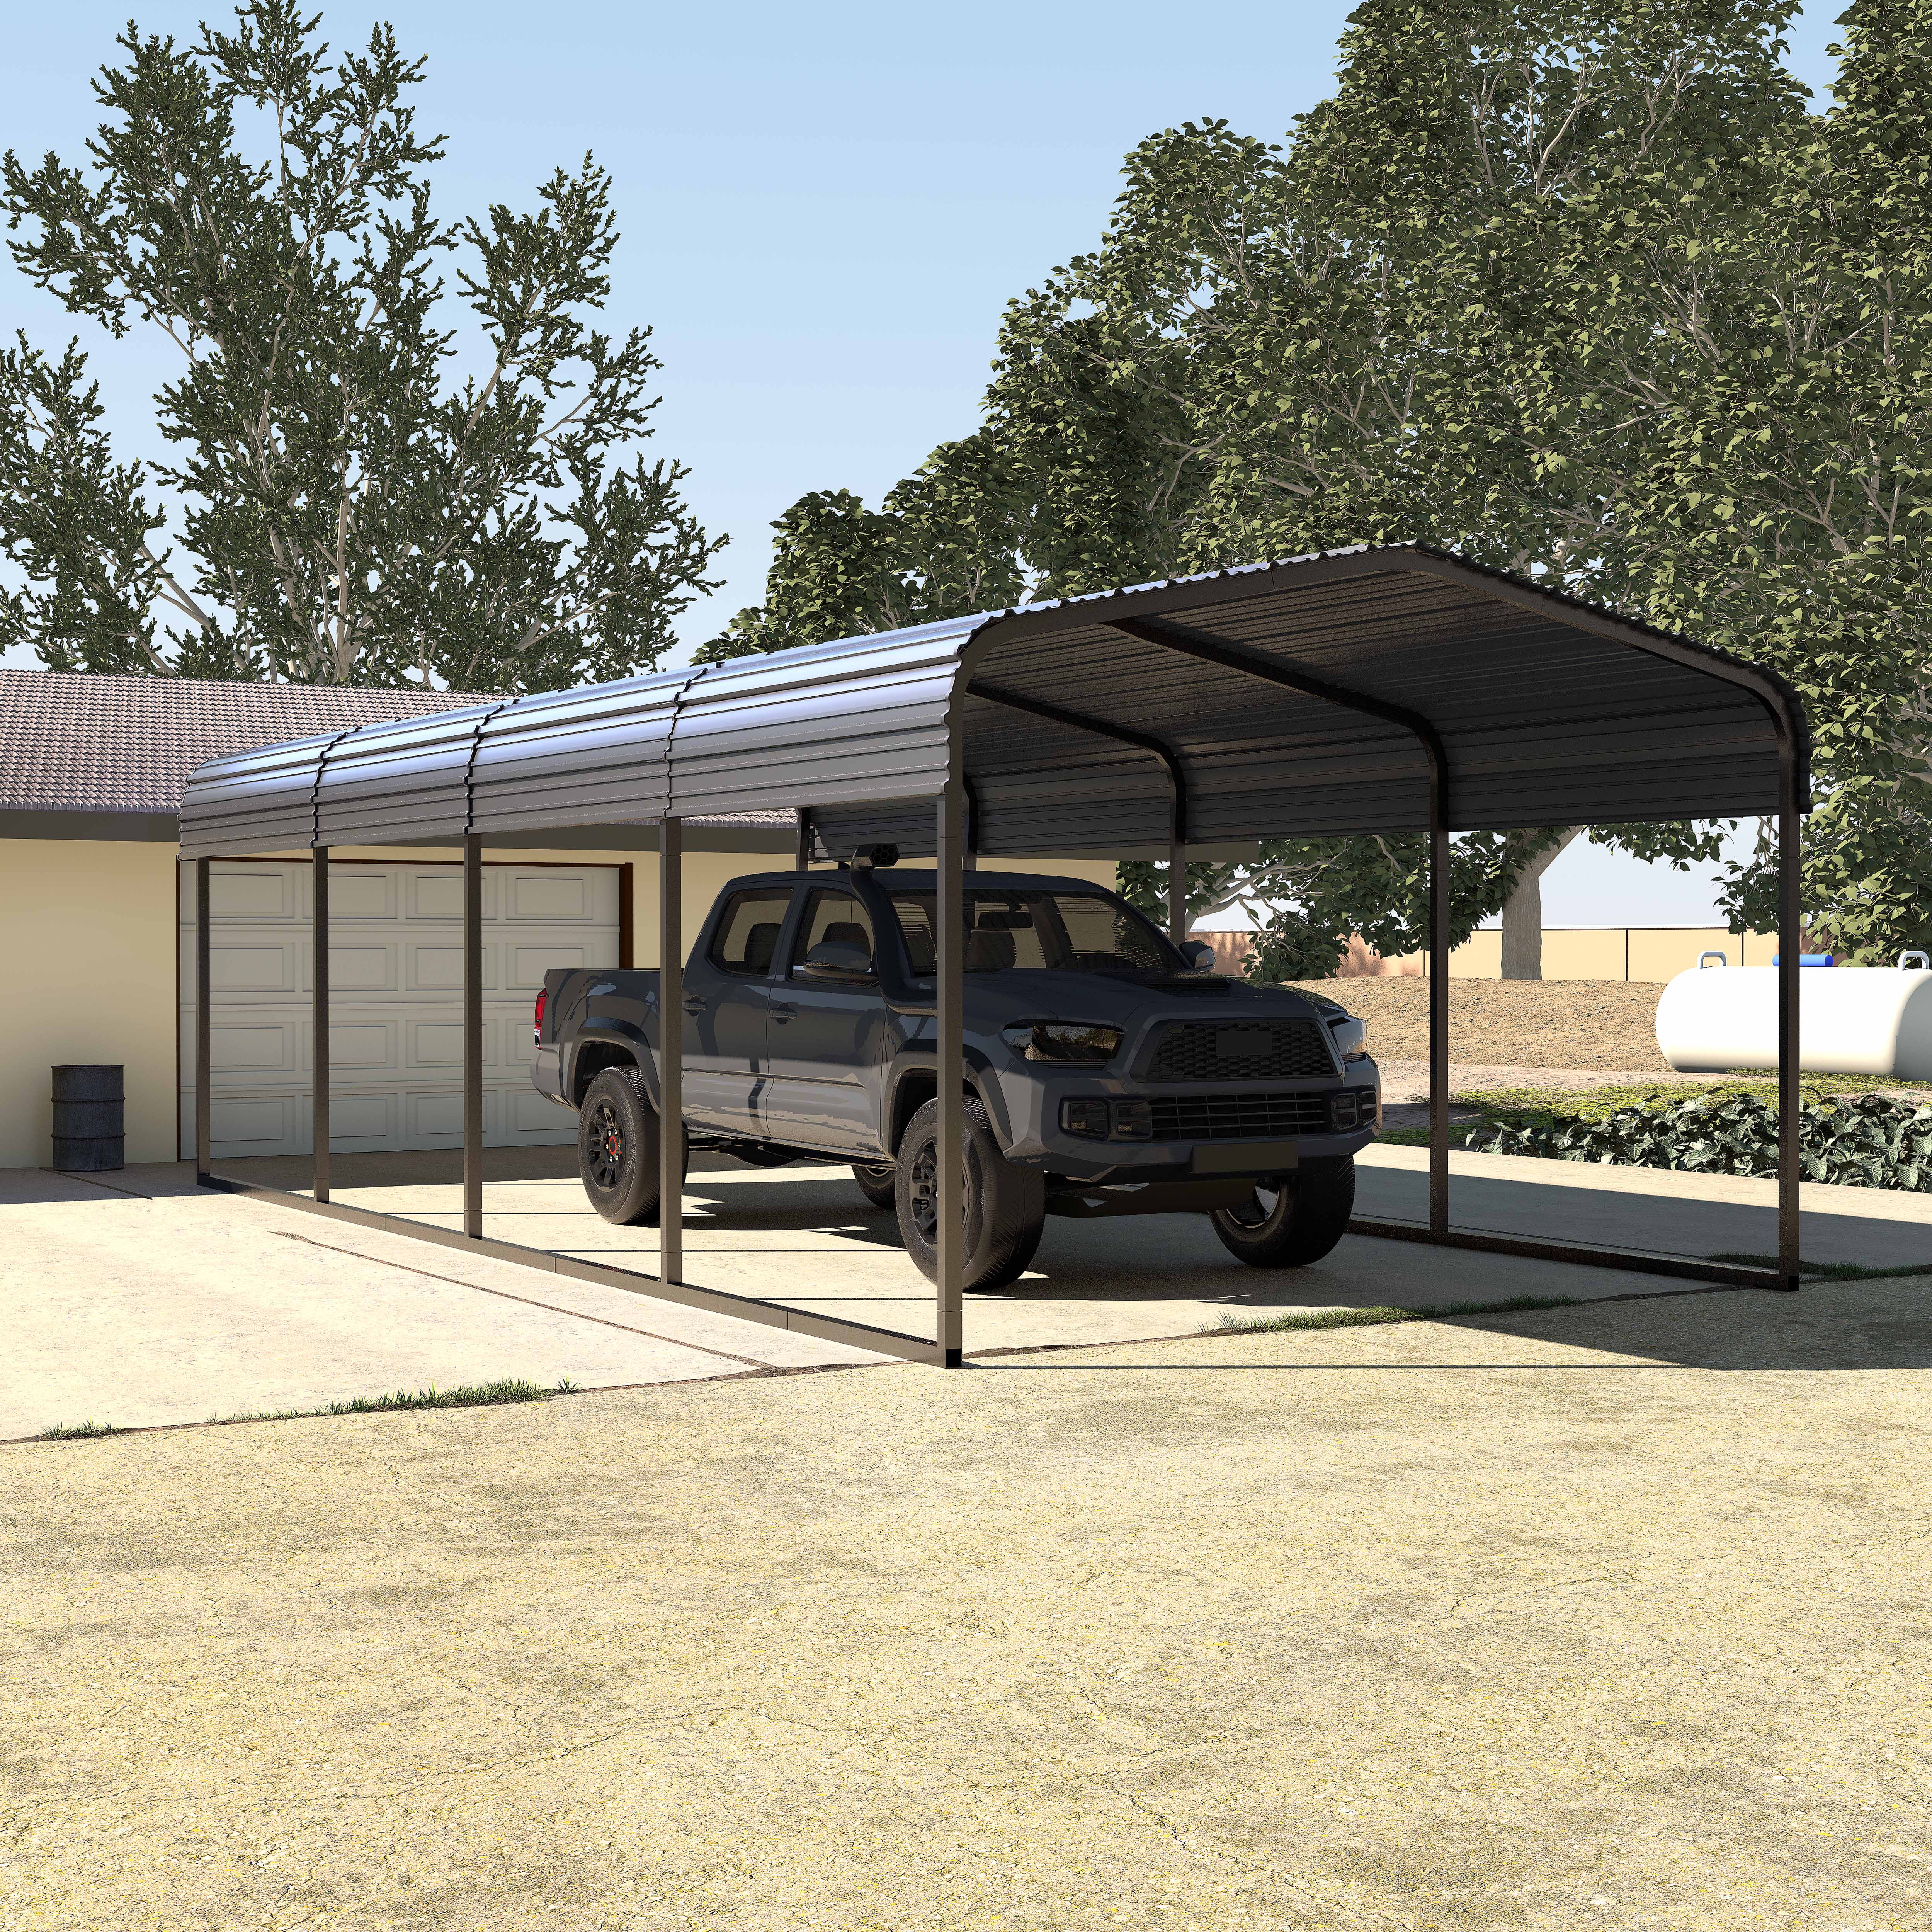 VEIKOUS 20' x 12' Outdoor Carport, Galvanized Metal Heavy Duty Garage Car Storage Shelter, Grey - image 2 of 18